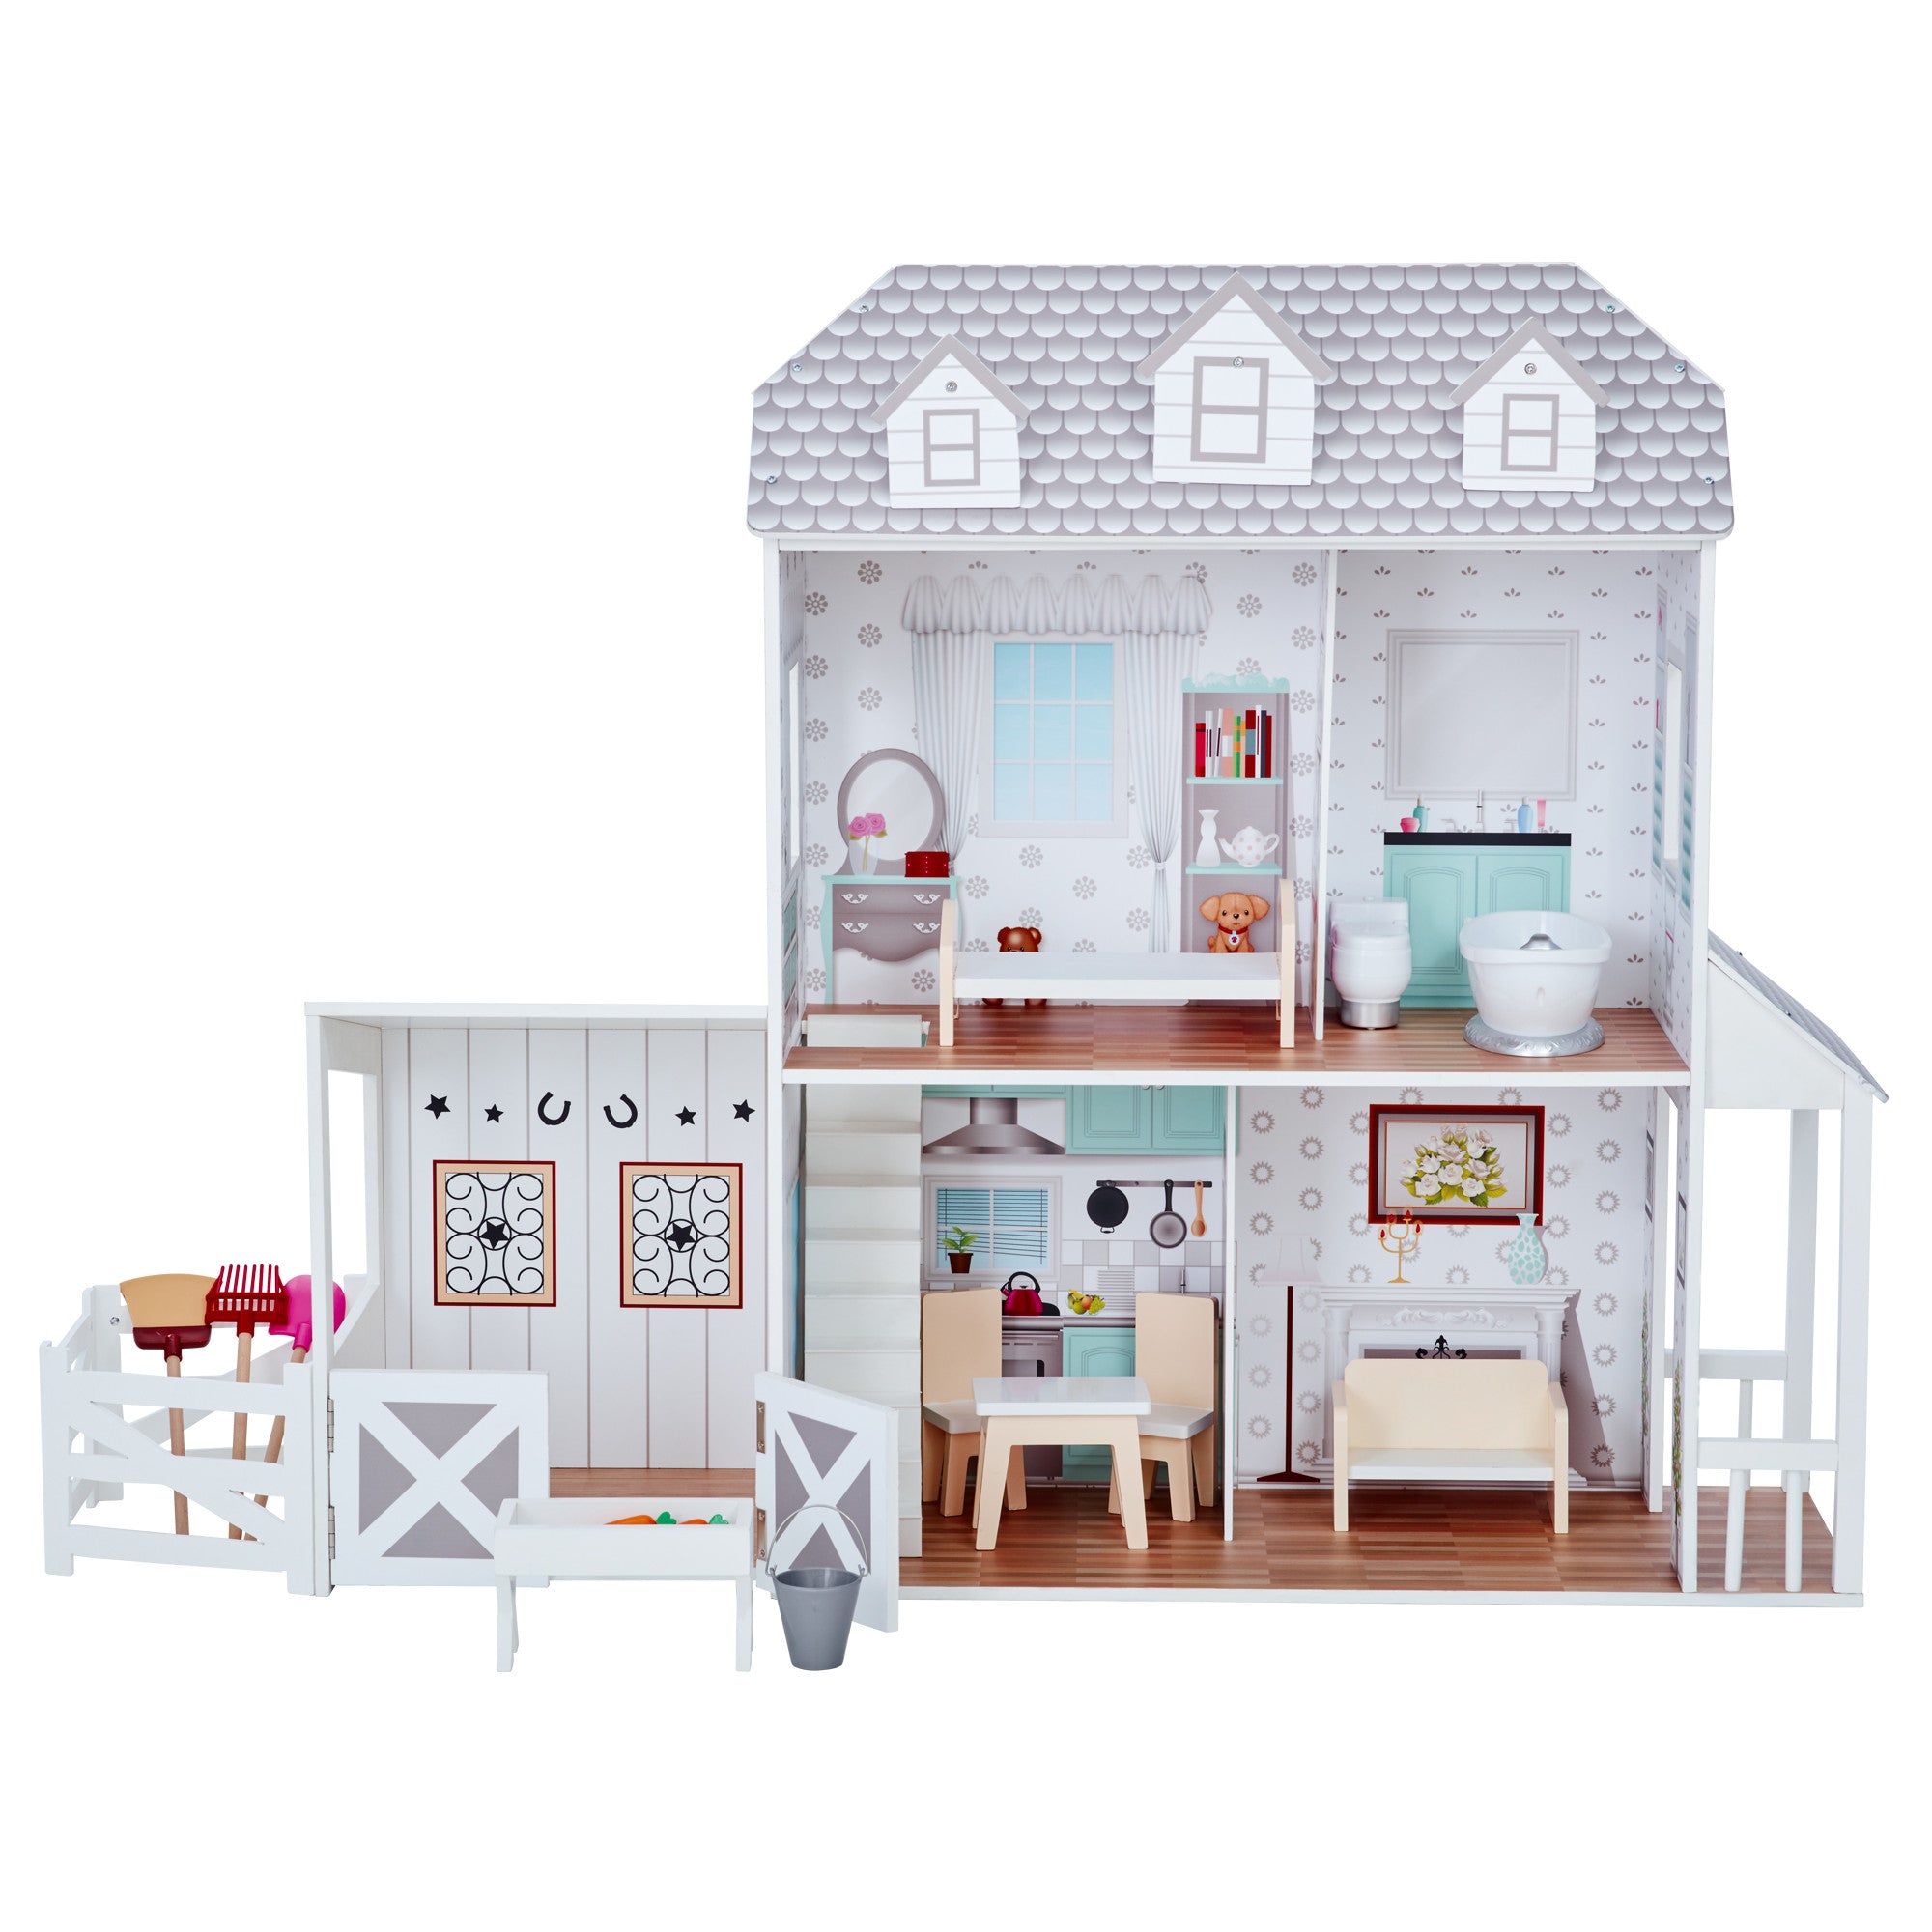 Teamson Kids Dreamland Farm Dollhouse with 14 Accessories, White/Gray